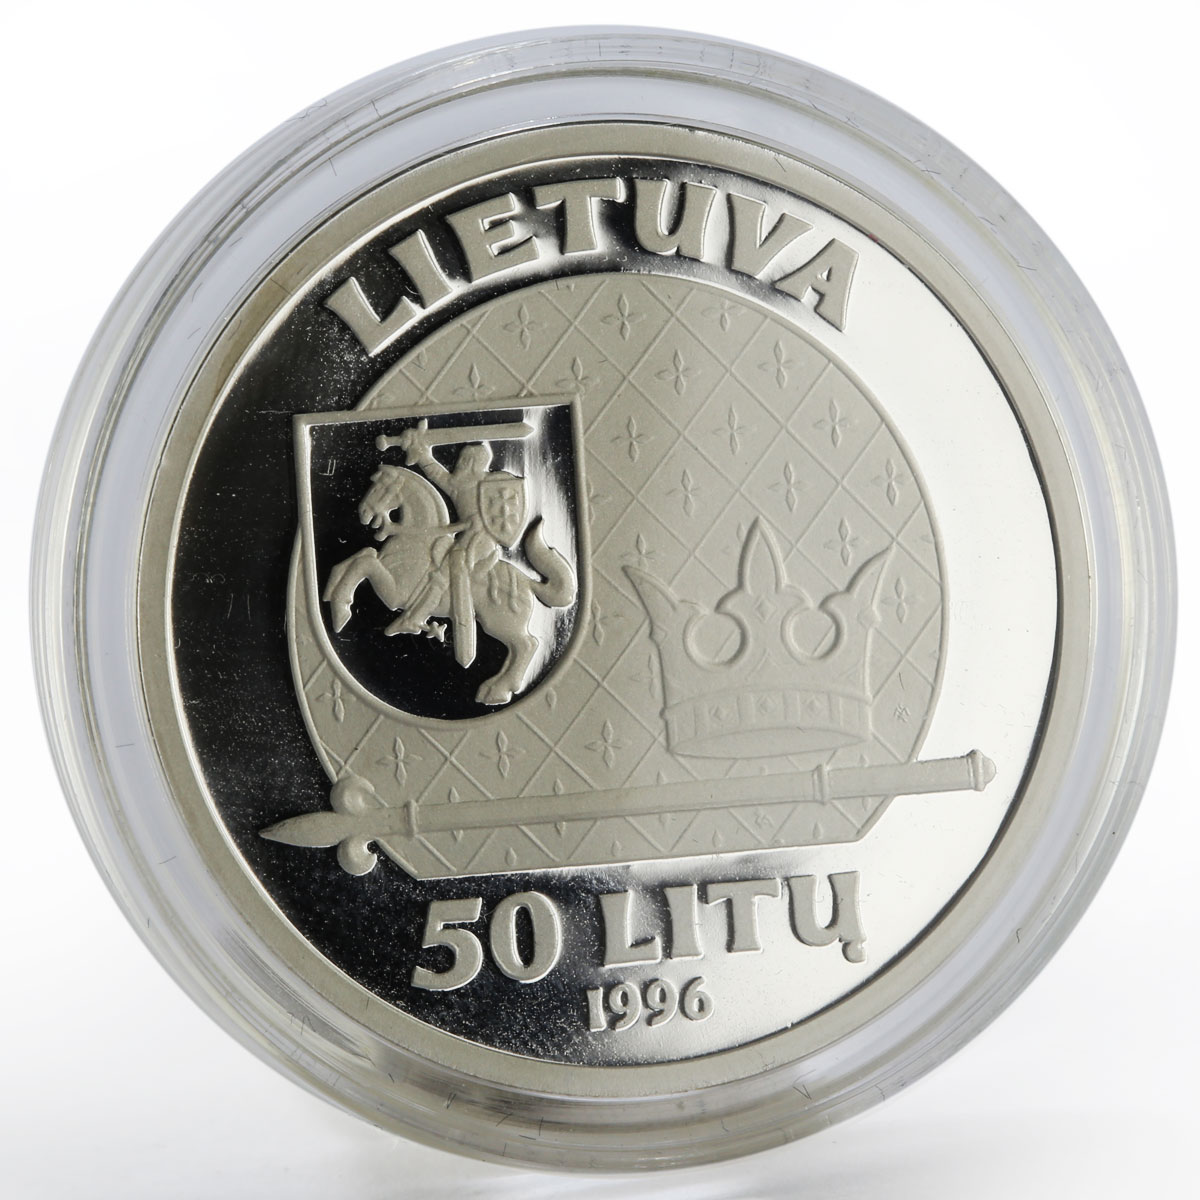 Lithuania 50 litu The King Mindaugas silver proof coin 1996